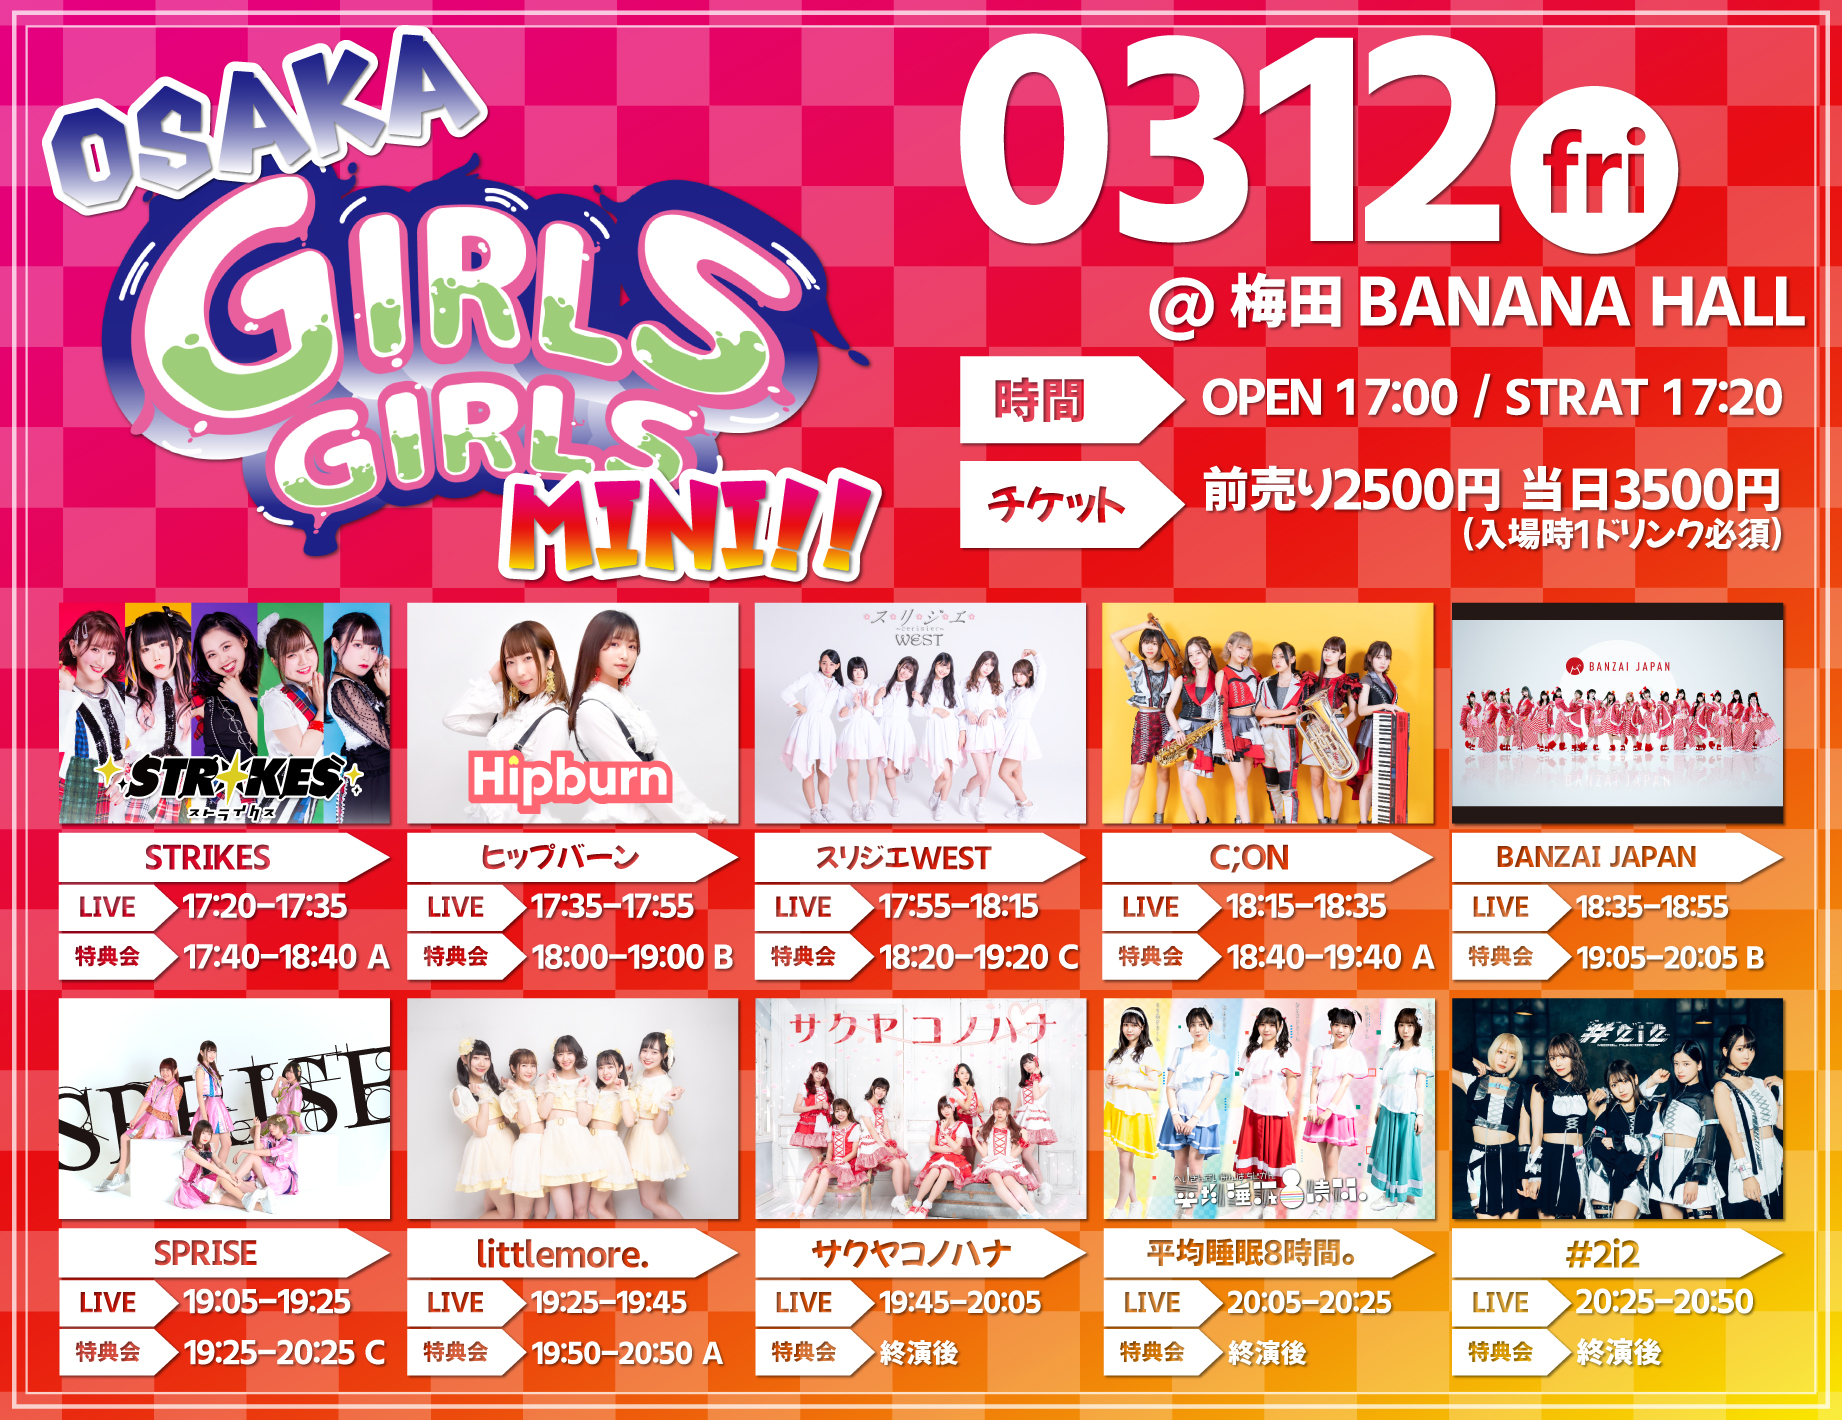 OSAKA GIRLS GIRLS mini!!